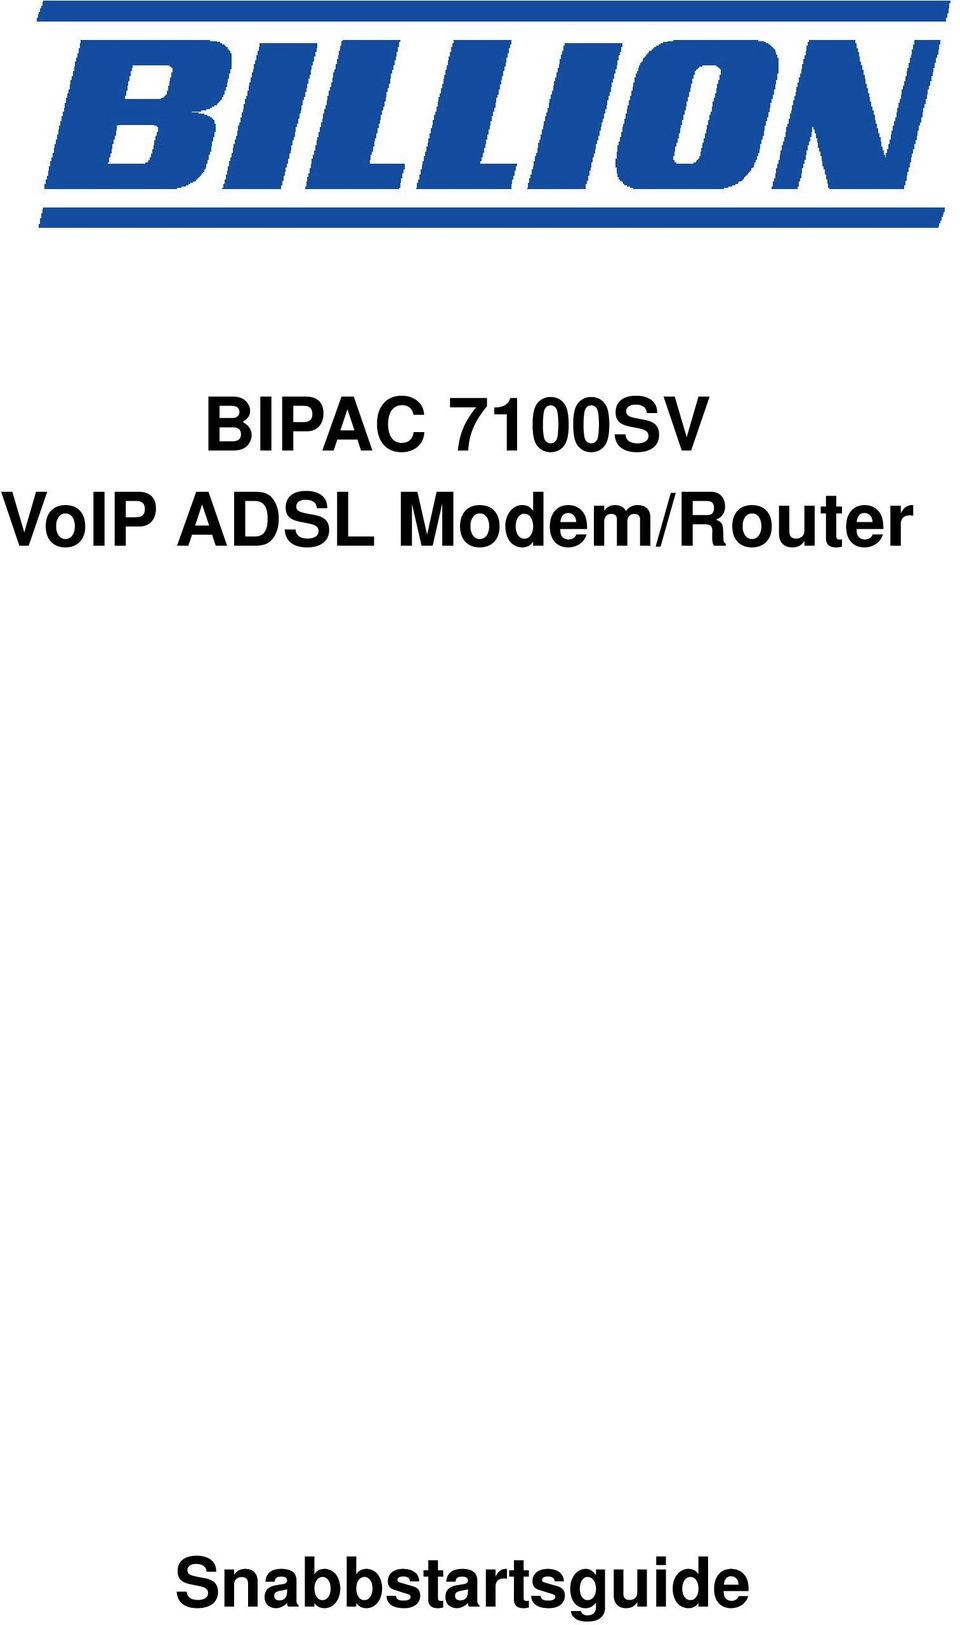 Modem/Router